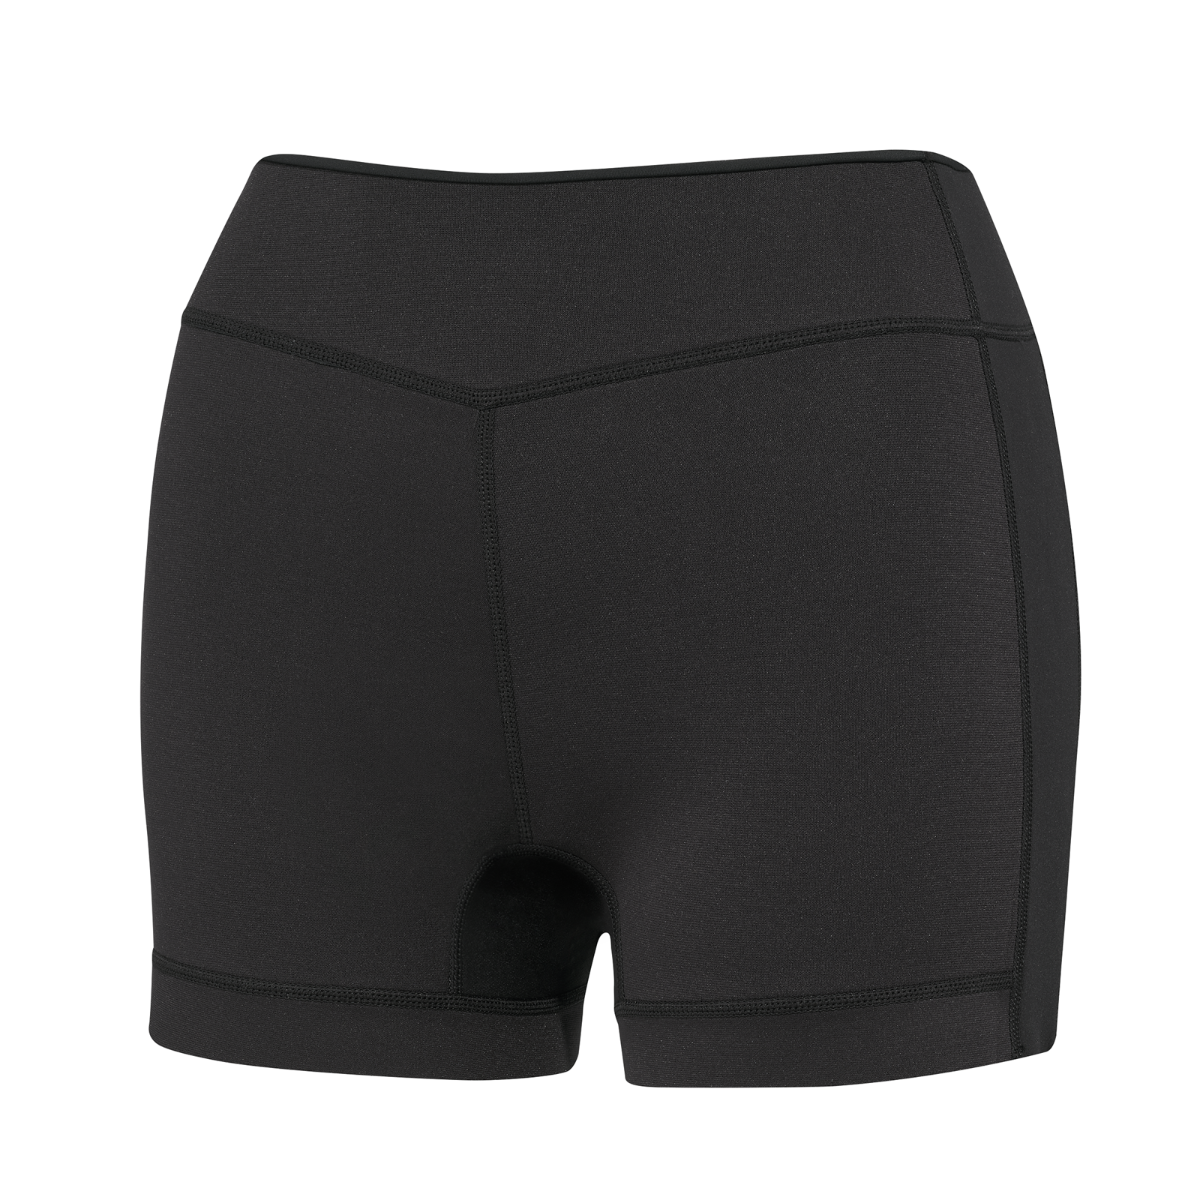 Sea-Doo Women's 1.5mm Neoprene Shorty Shorts